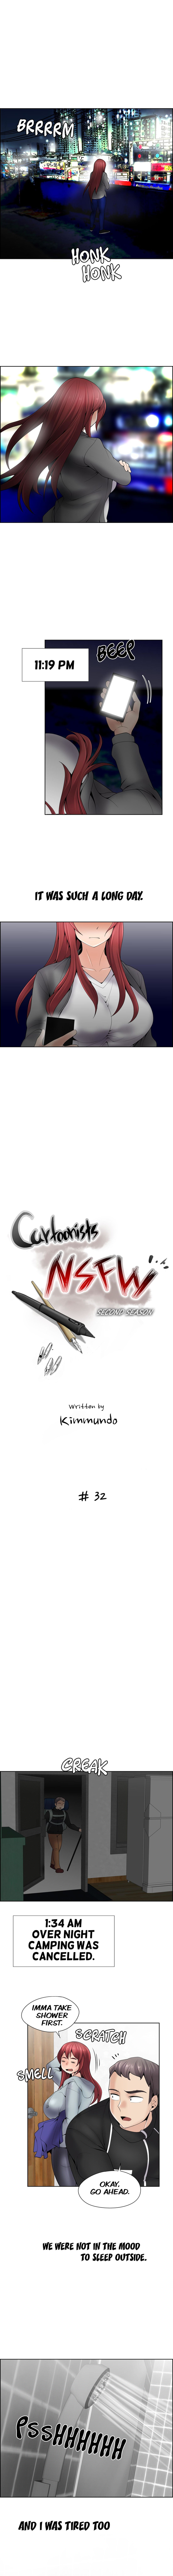 Cartoonists NSFW vol.2 ch.84